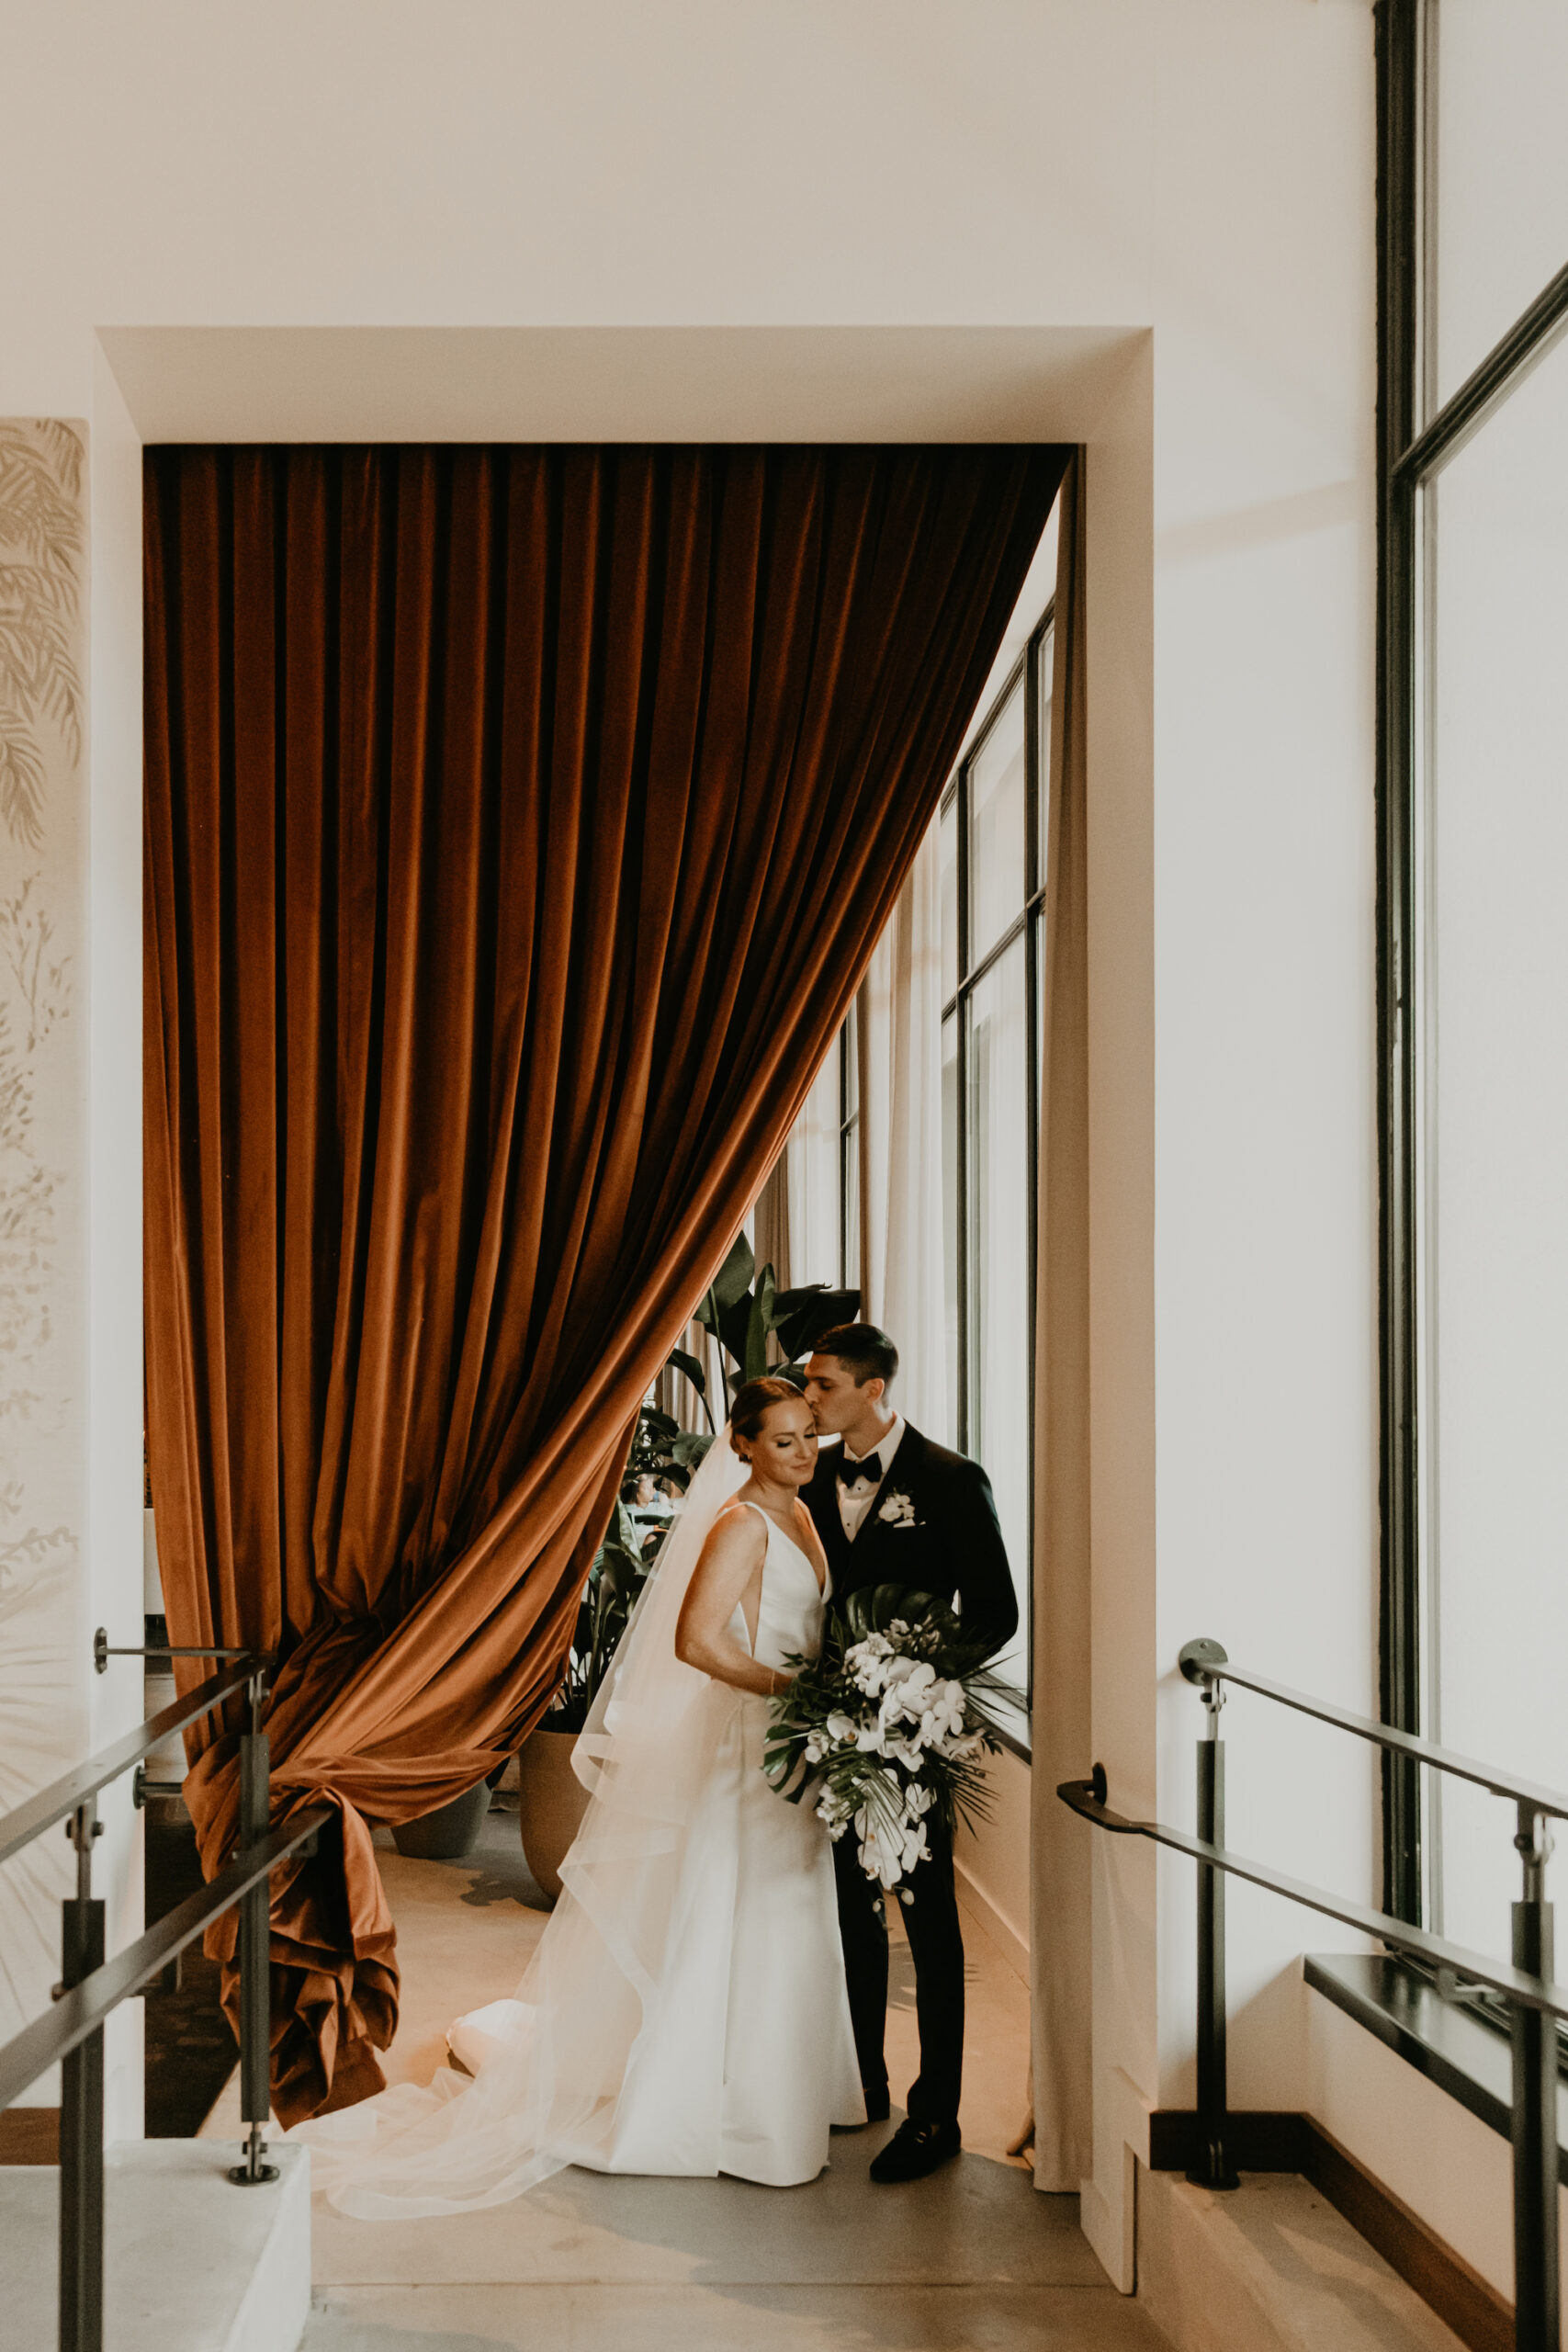 Romantic Bride and Groom Wedding Portrait | Tampa Bay Florist Monarch Events and Design | Planner Coastal Coordinating | Historic Boutique Venue Hotel Haya